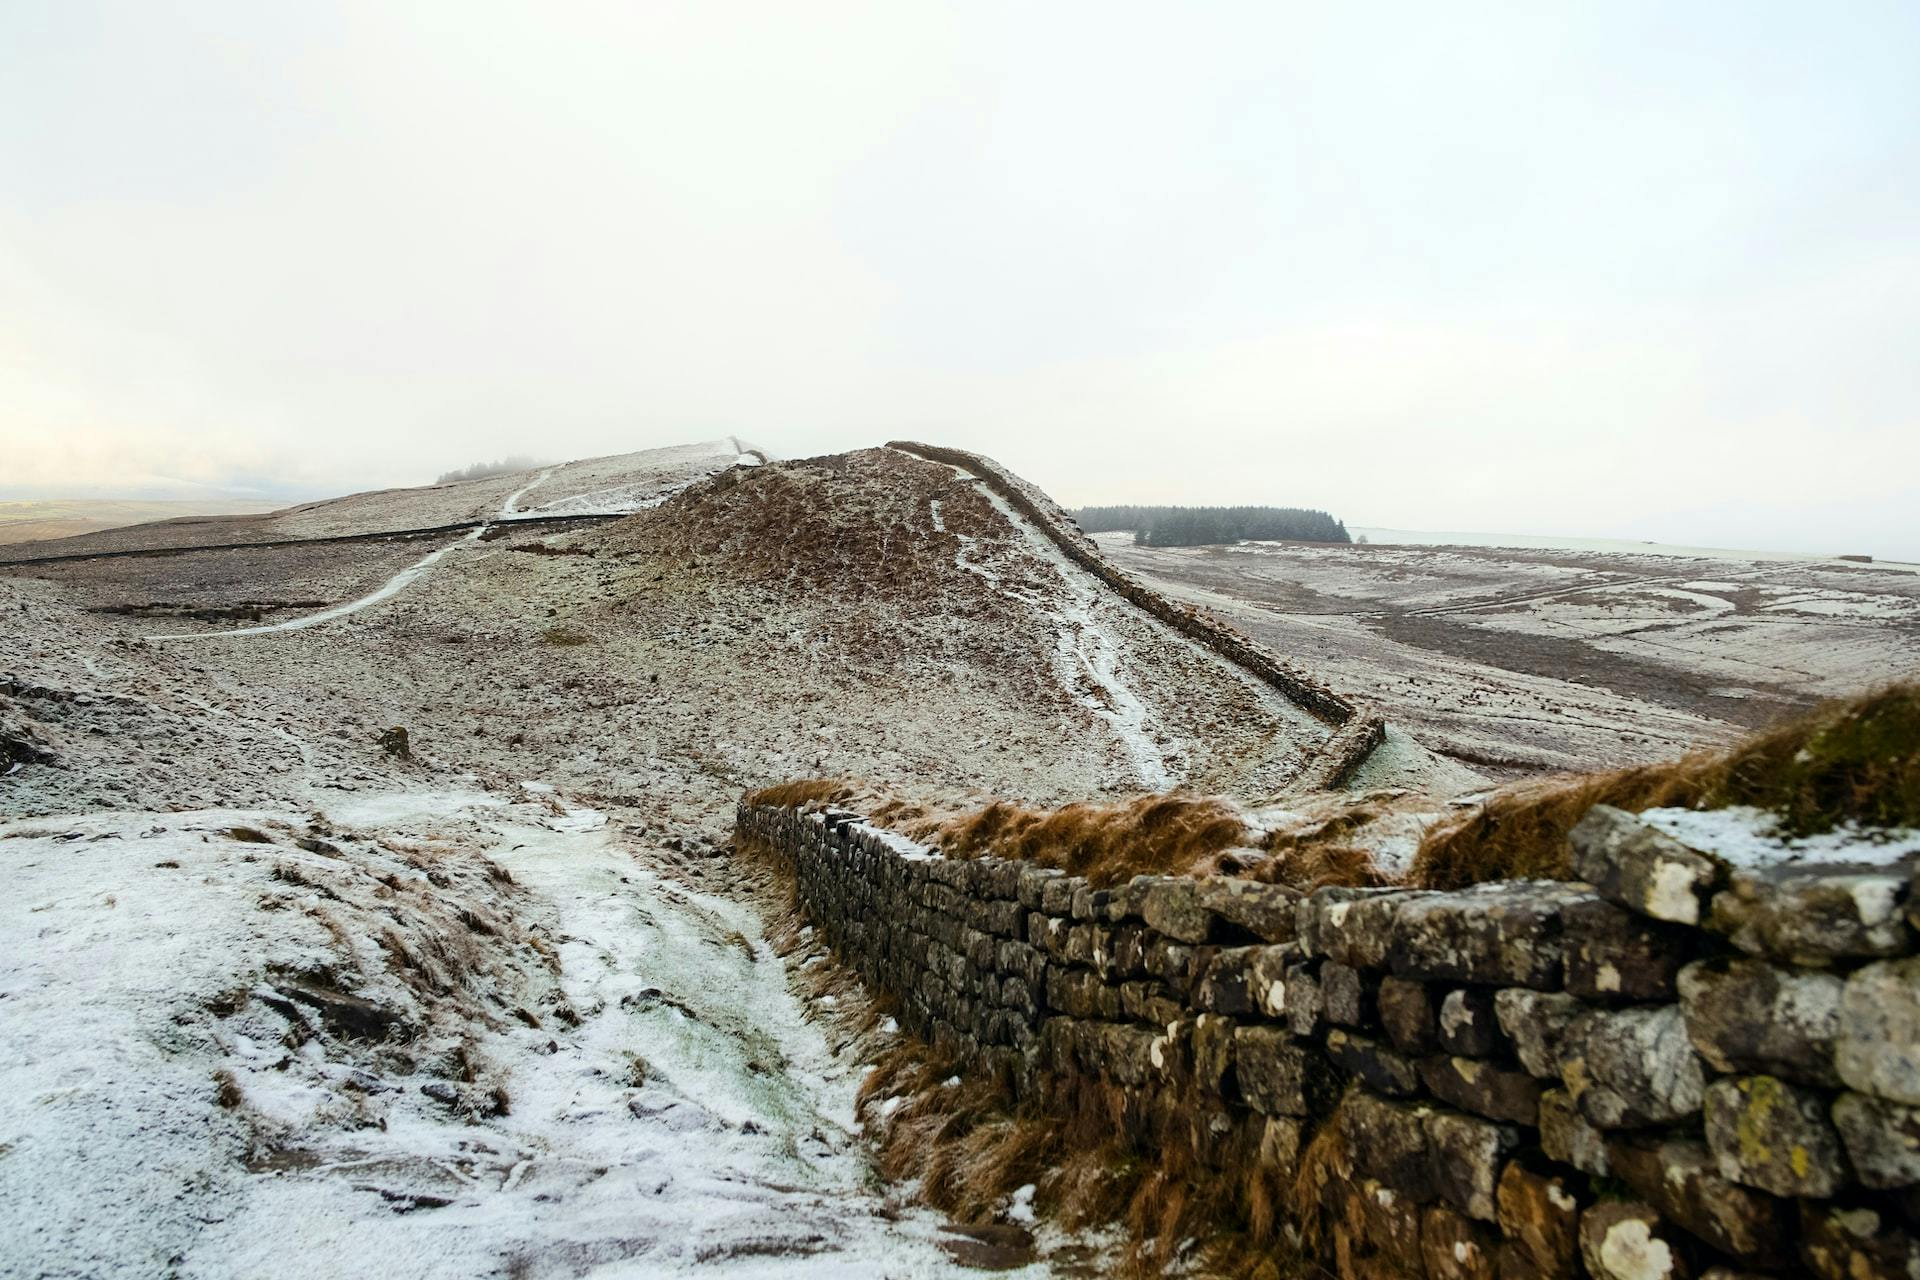 Hadrian’s wall: the northmost edge of the Roman Empire